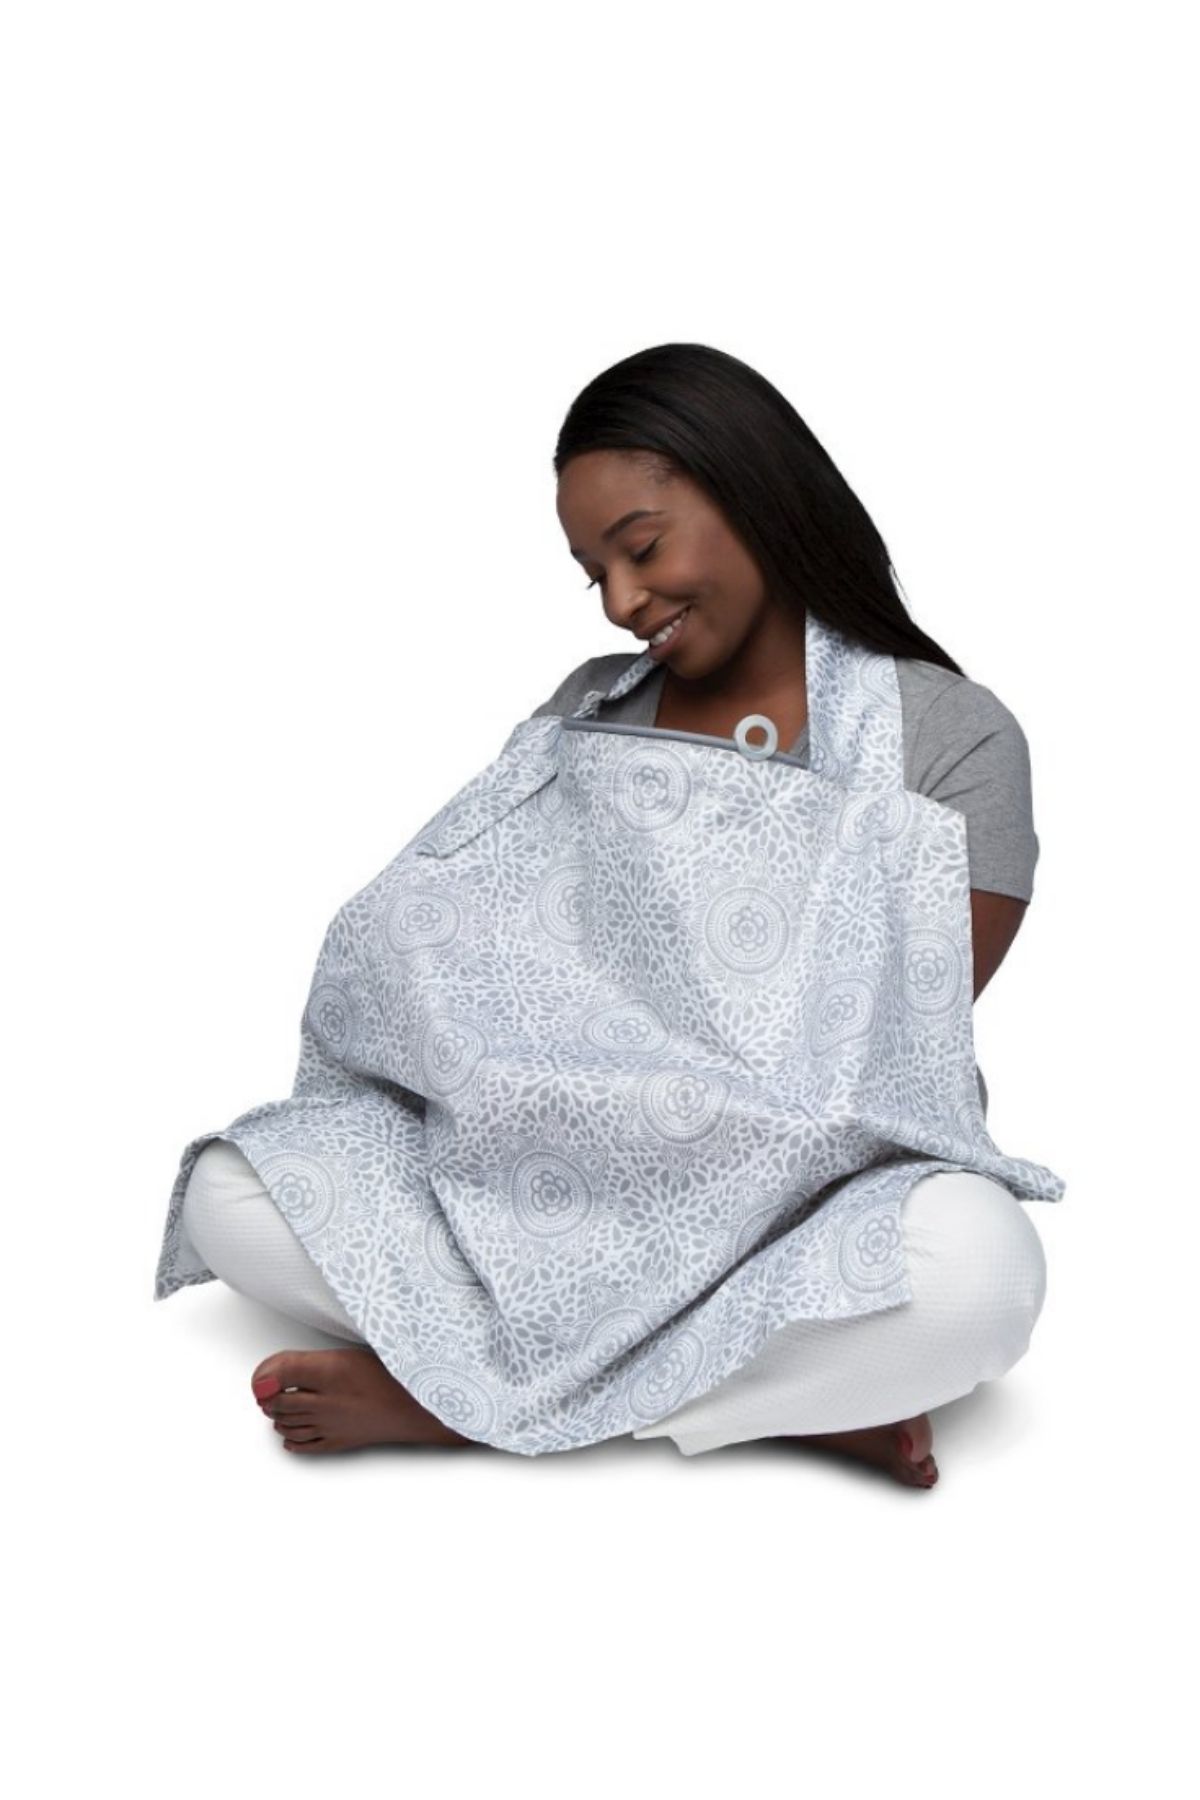 Woman breastfeeds baby wearing nursing cover.